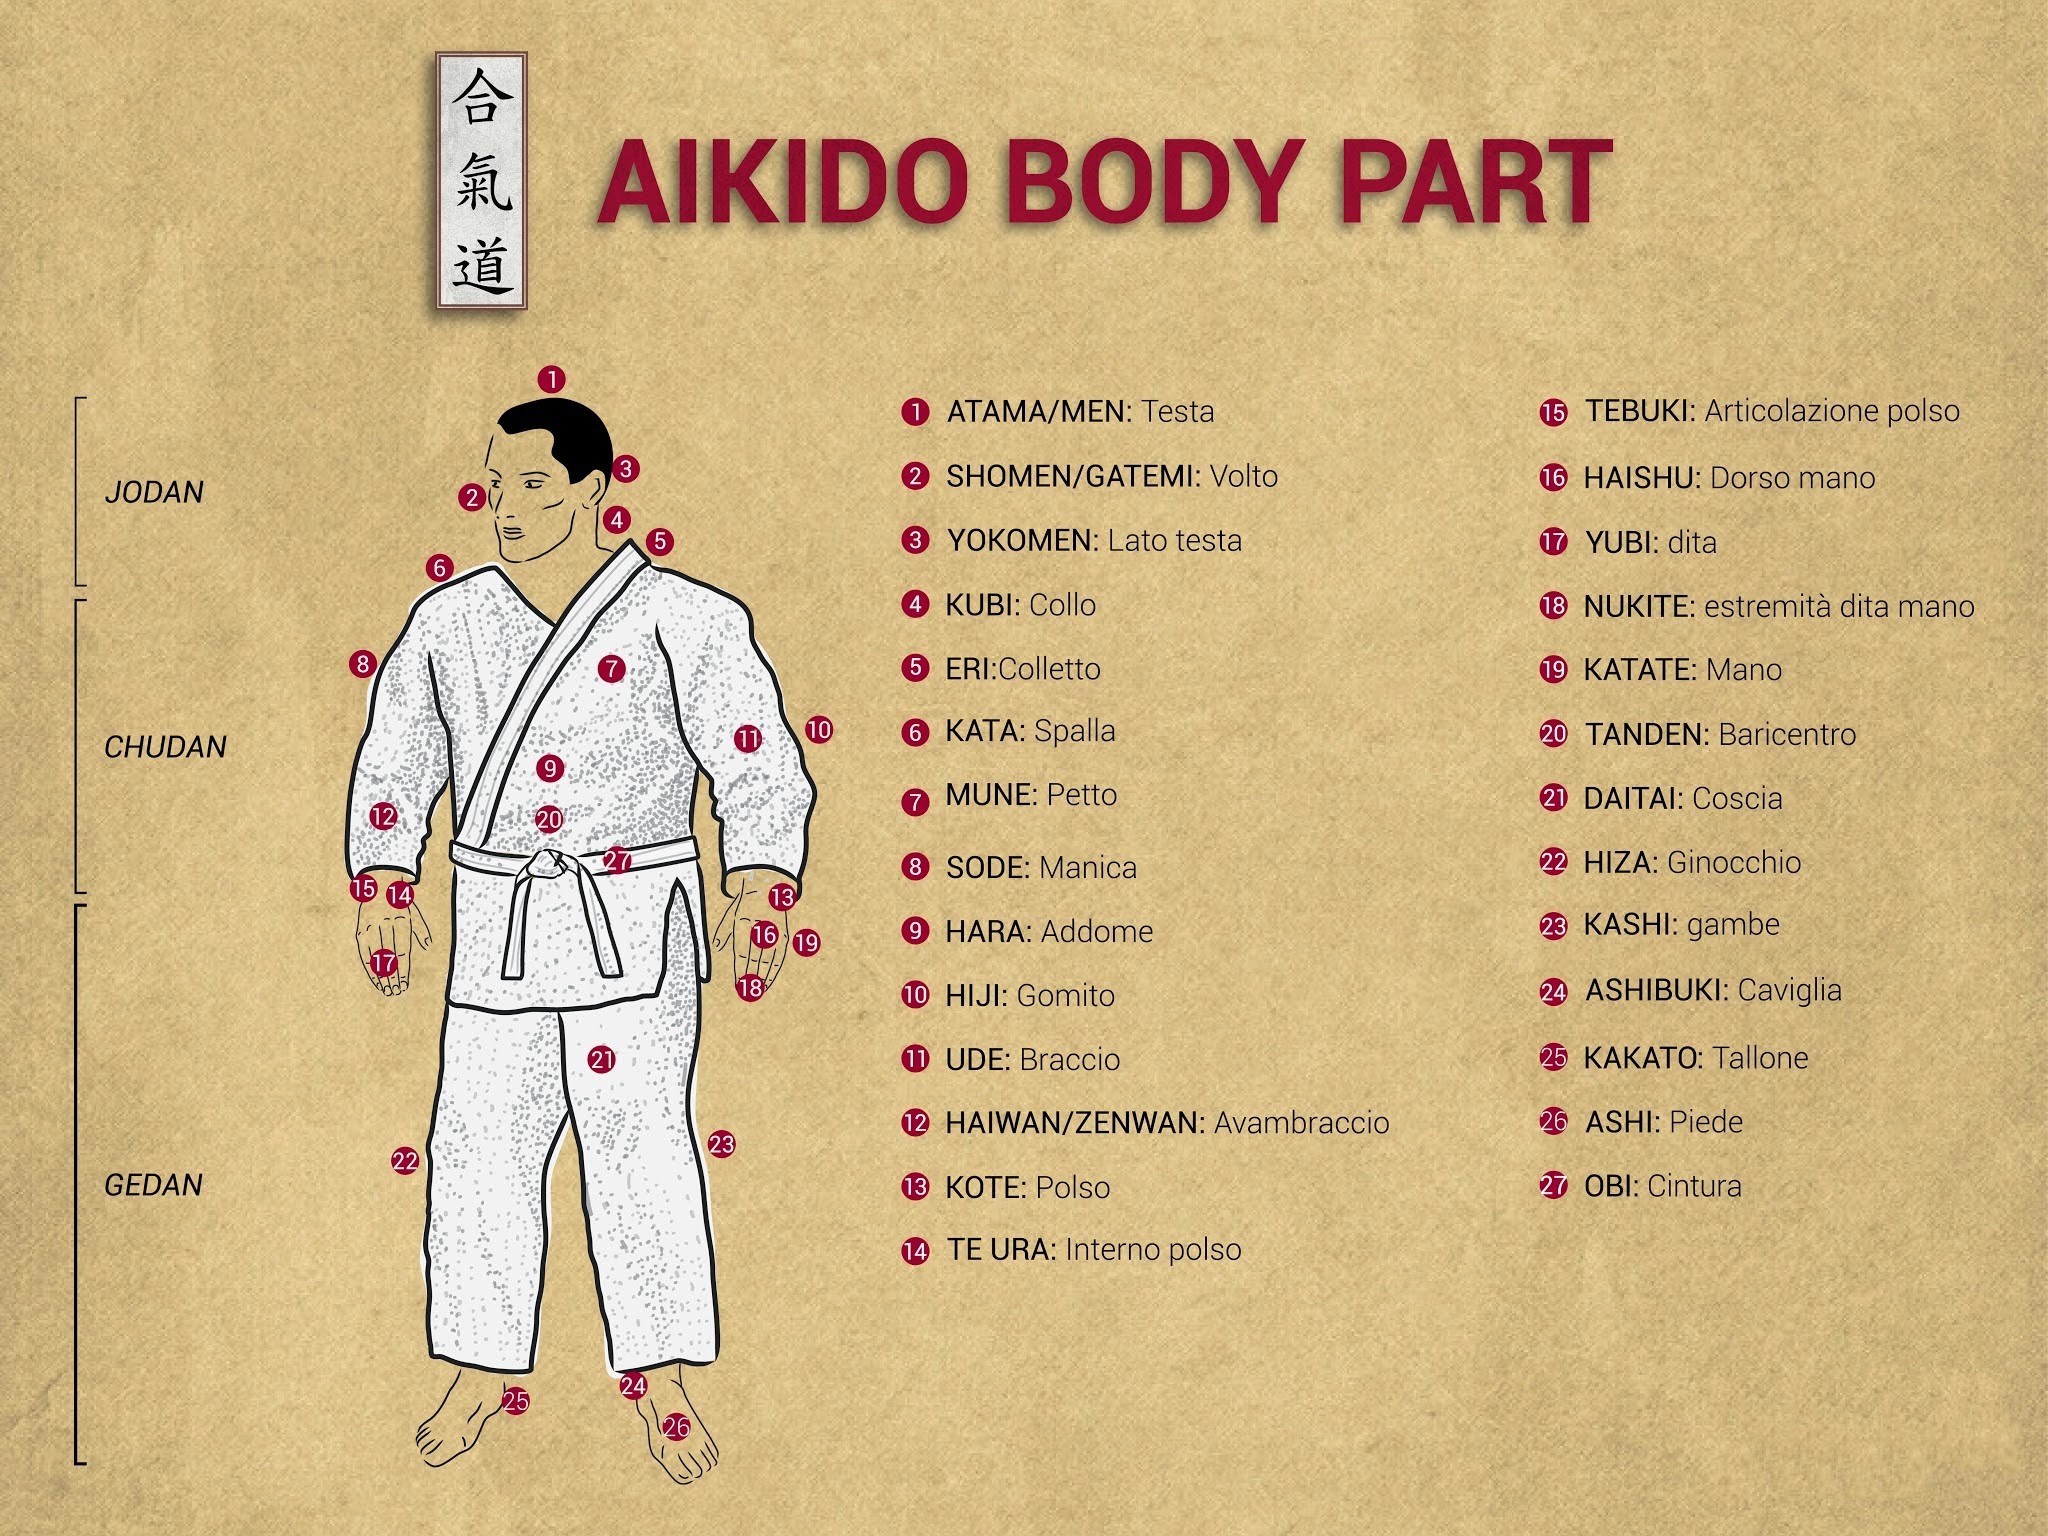 2048x1536 wallpaper.wiki-Aikido-Body-Part-Wallpaper-PIC-WPC002252